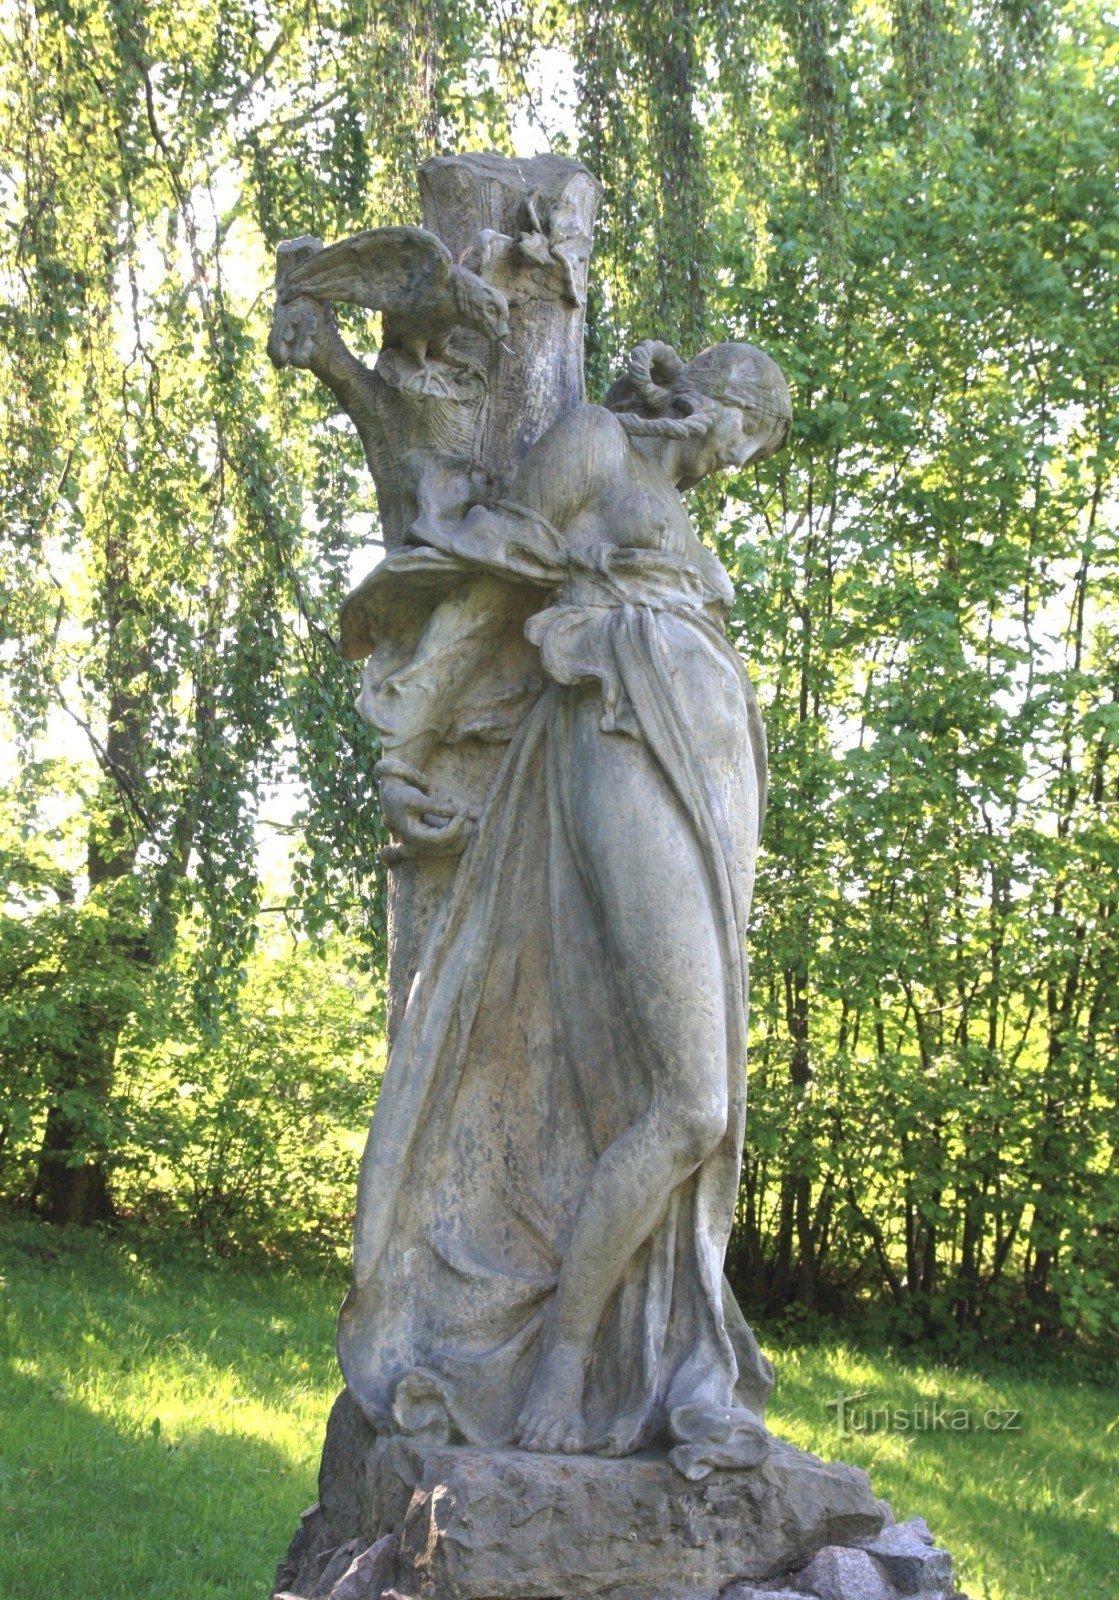 The statue of Šárka in Javorka park